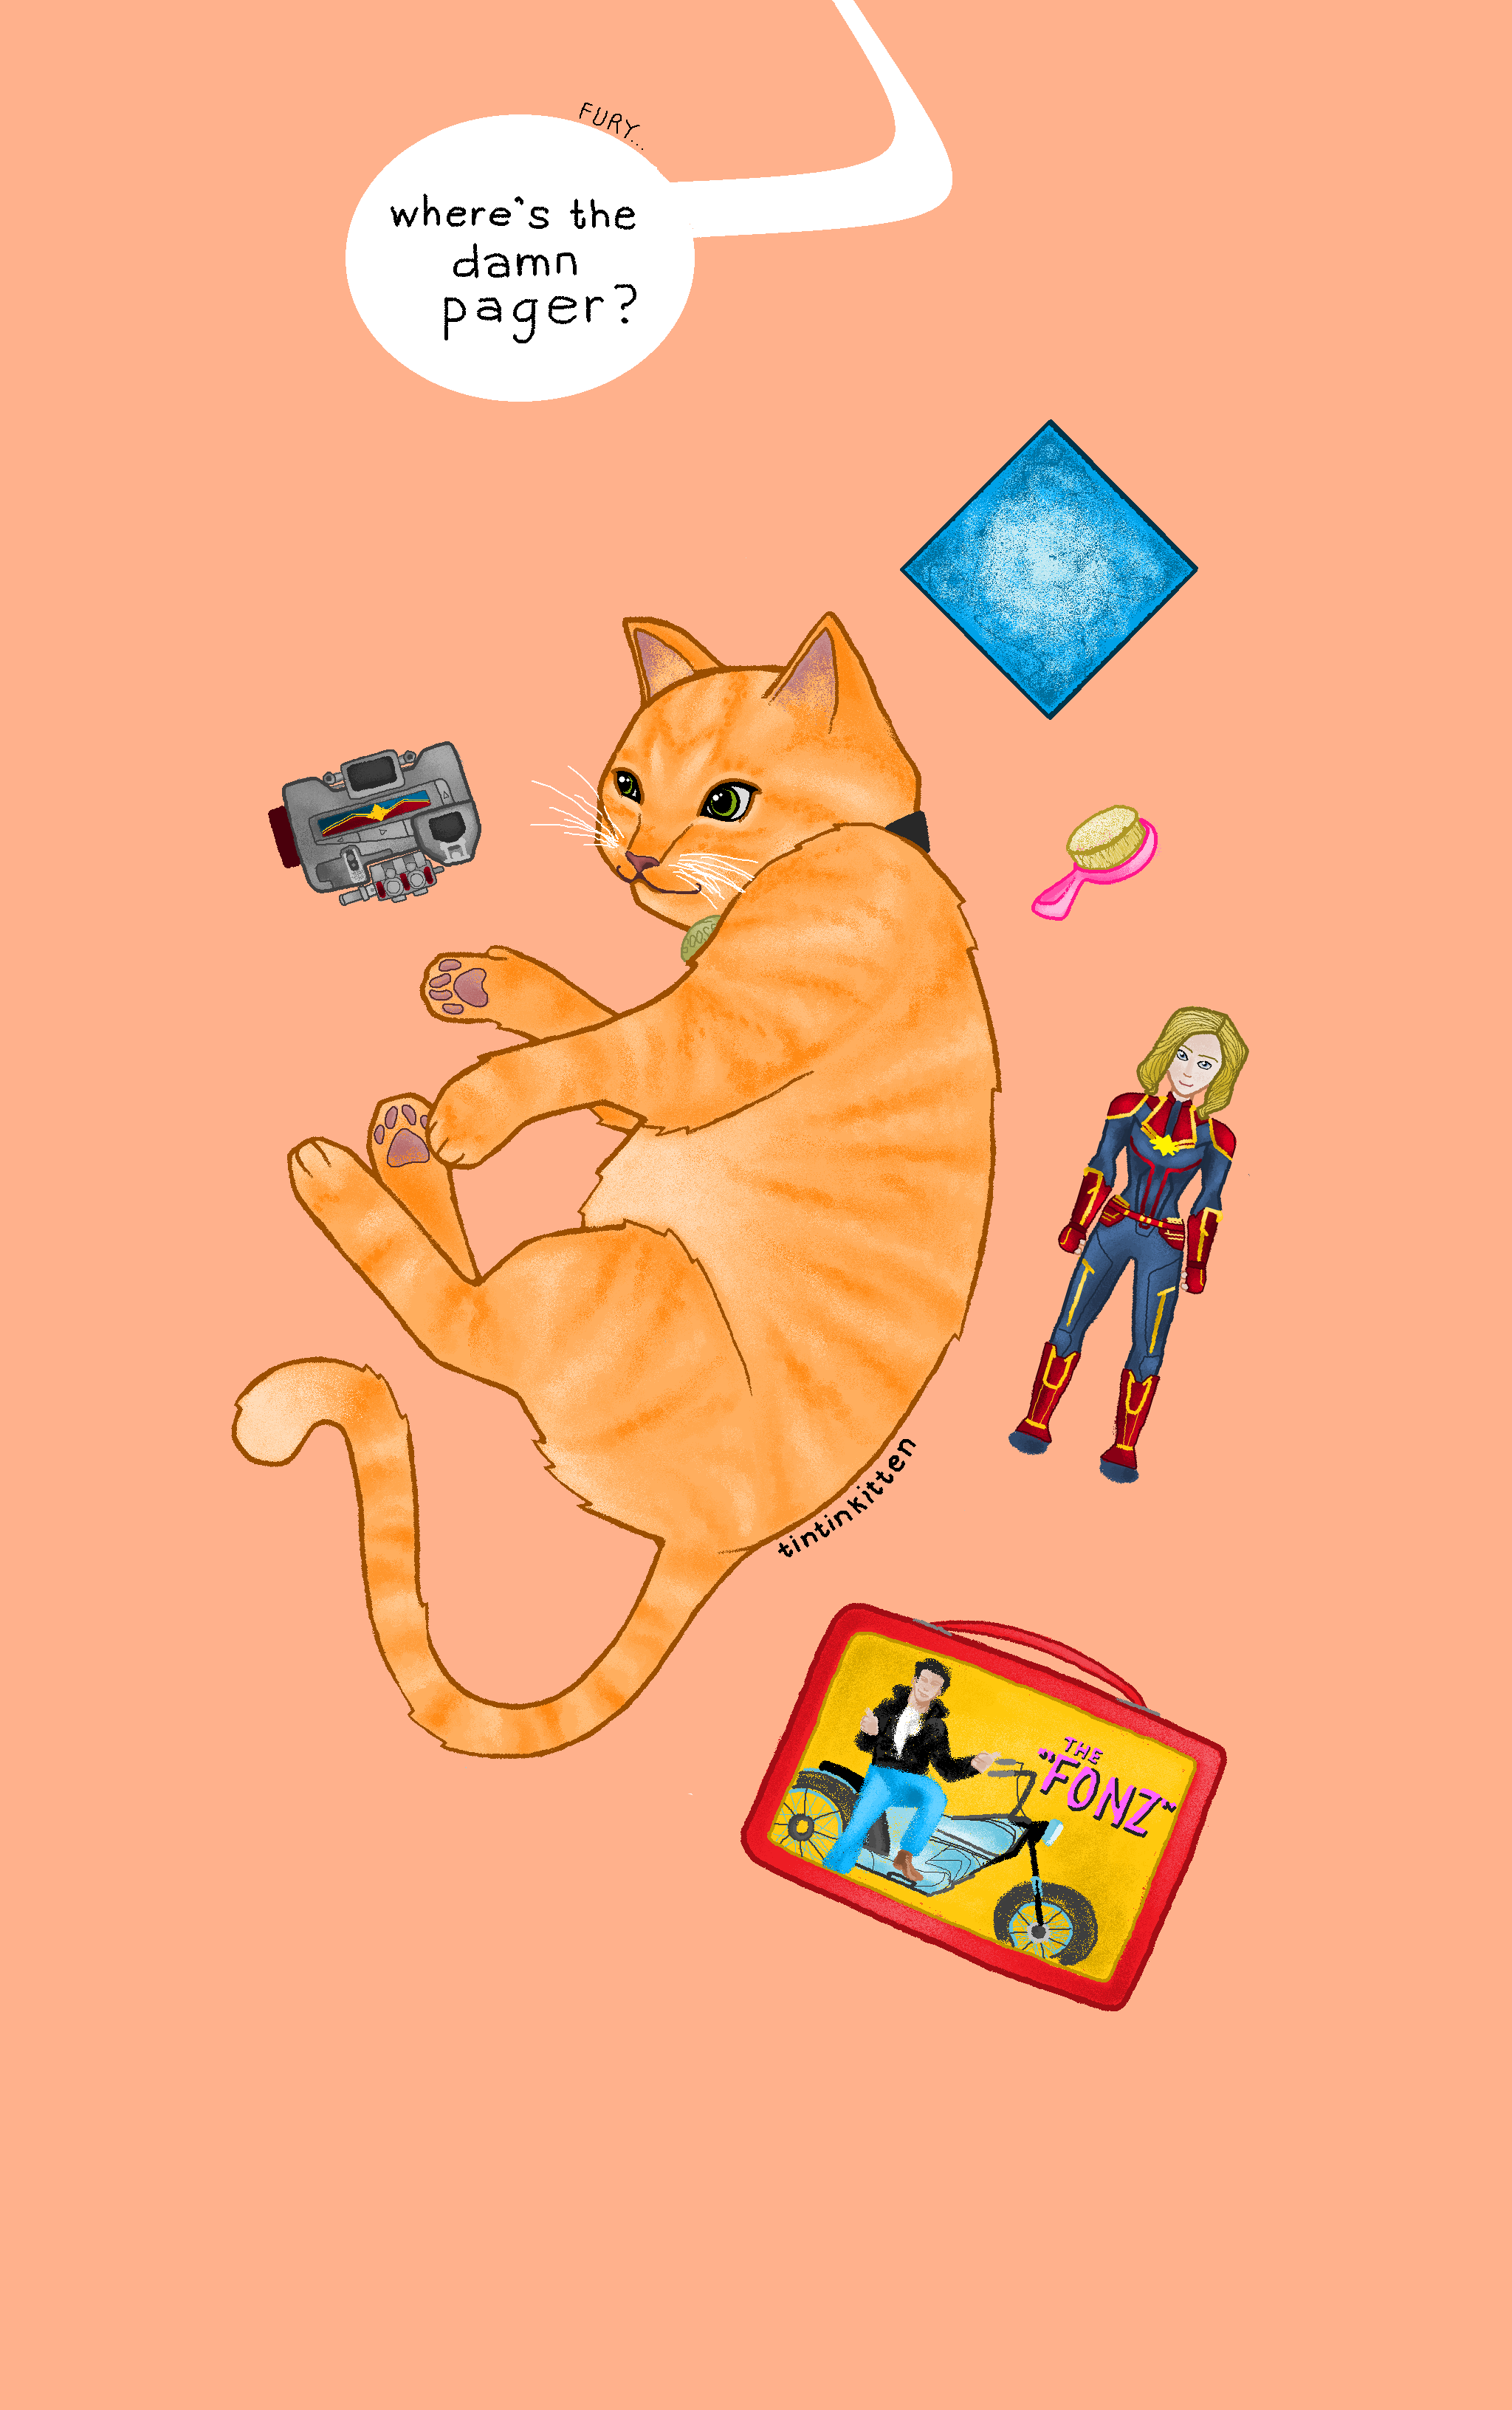 goose the flerken cat; microsoft paint #CaptainMarvel #NickFury #GooseTheCat #HigherFurtherFaster #ma. Captain marvel carol danvers, Captain marvel, Marvel heroes